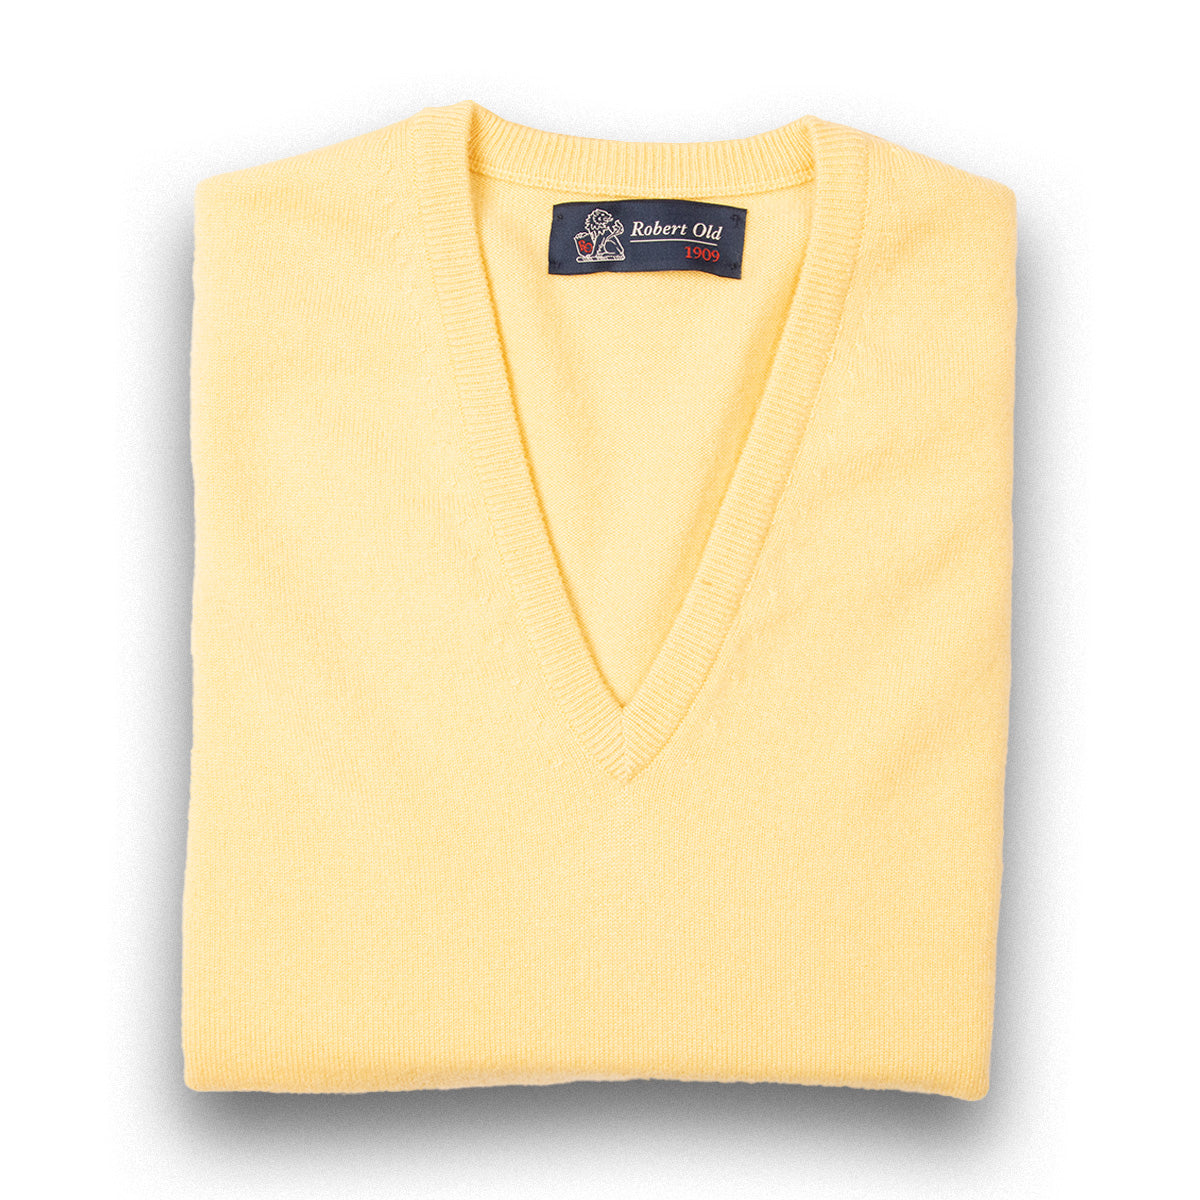 Lemon Frost Chatsworth 2ply V-Neck Cashmere Sweater  Robert Old Lemon Frost UK 36" 